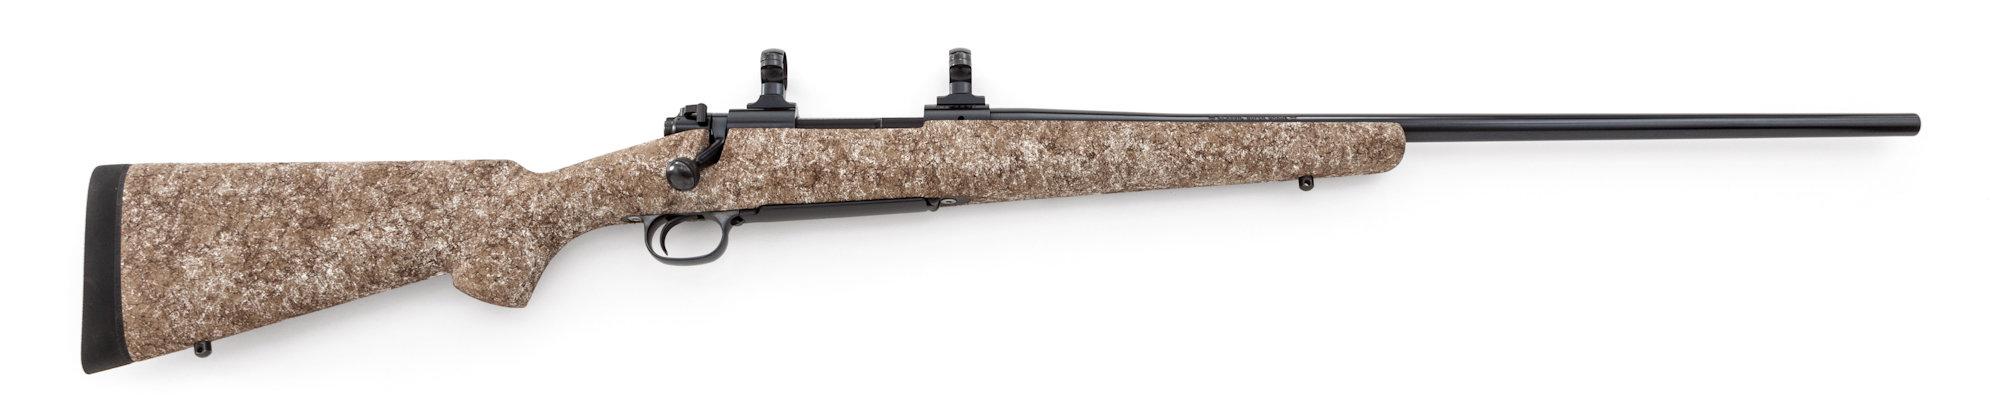 Winchester Classic Super Grade Bolt Action Rifle